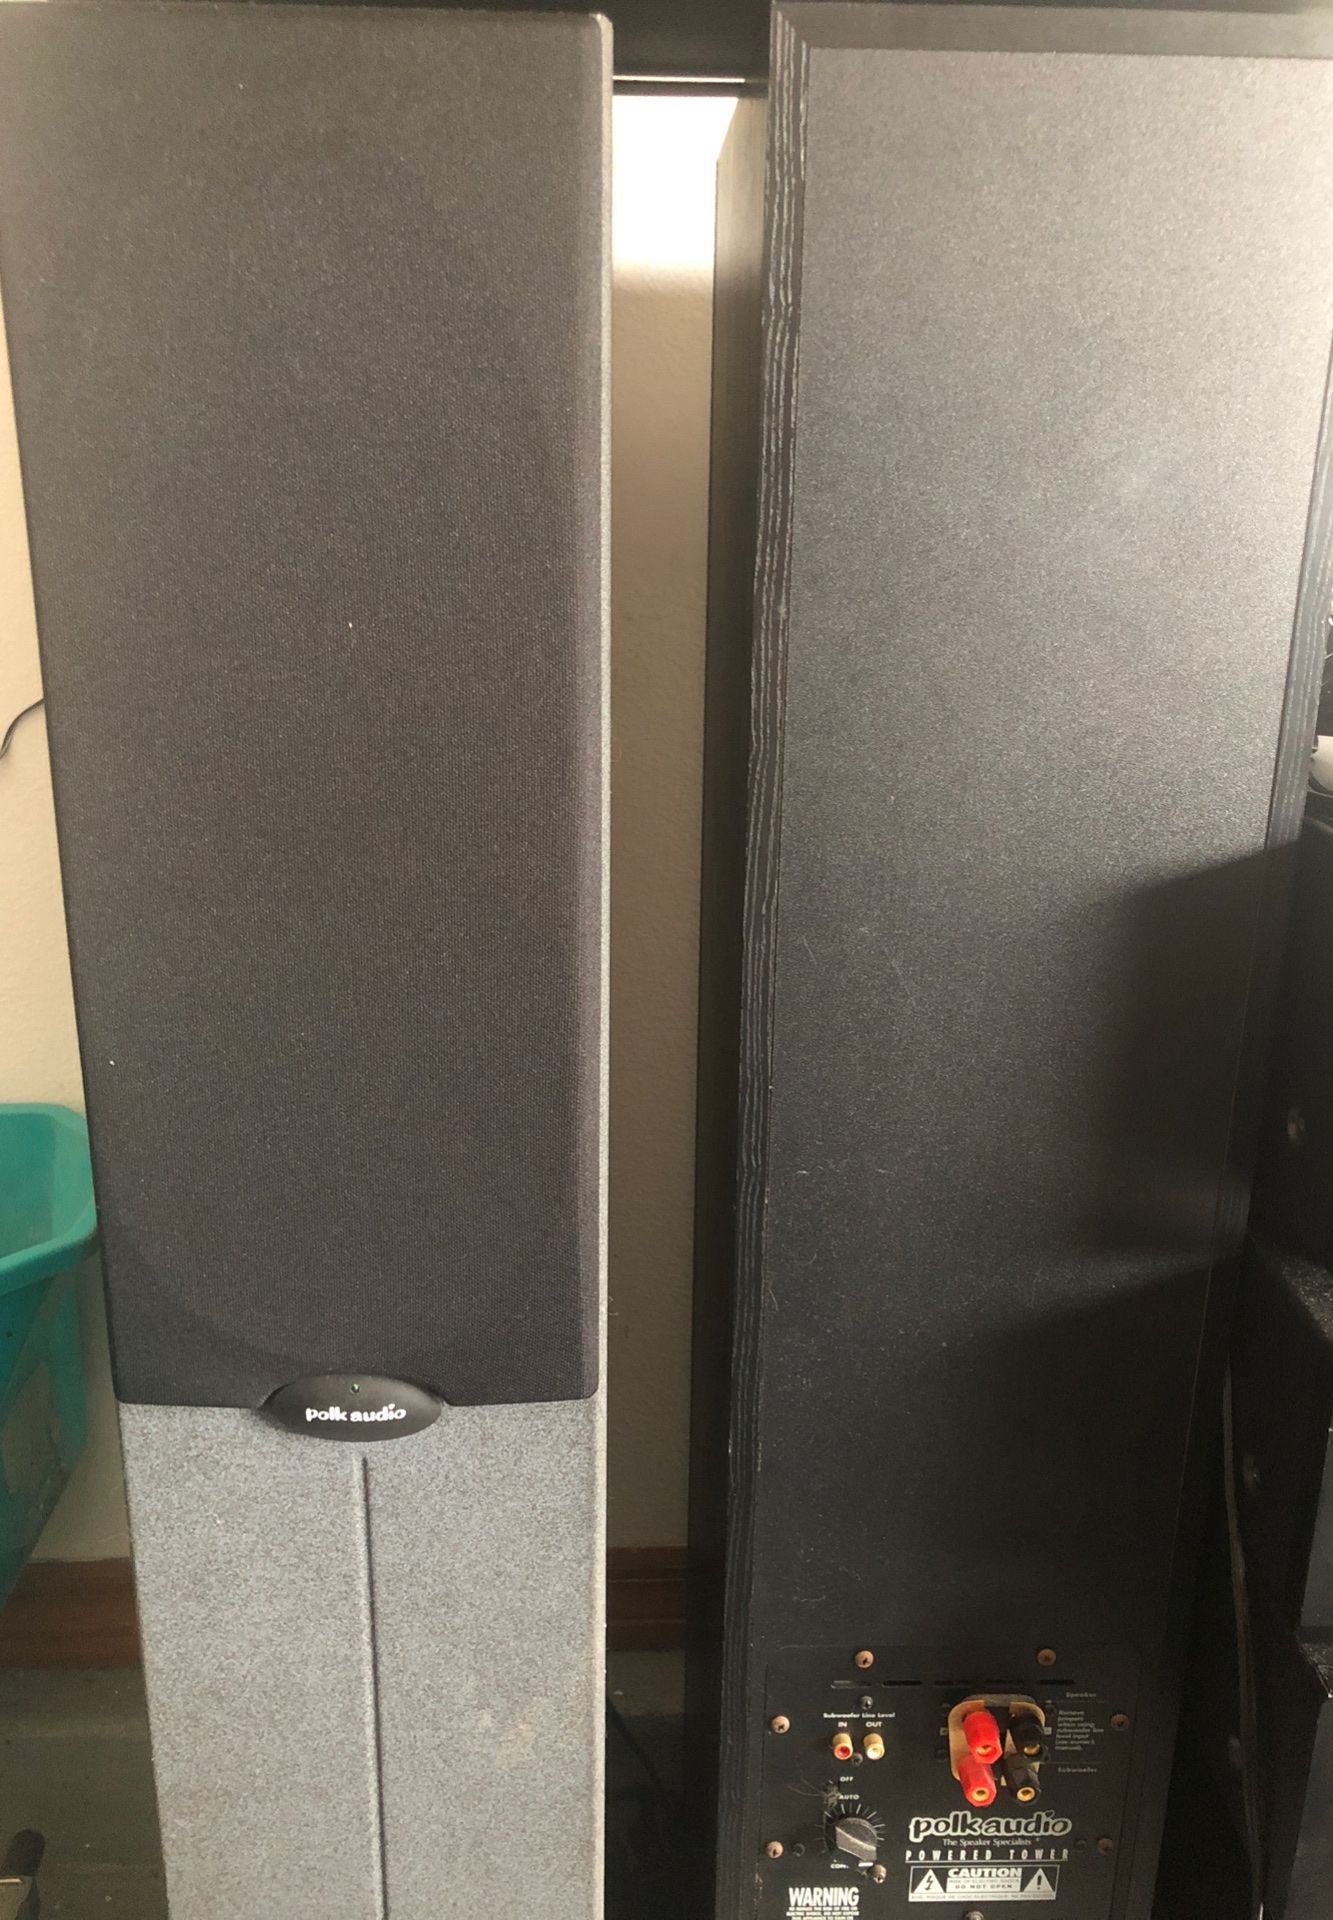 Polk audio powered speakers work beautiful